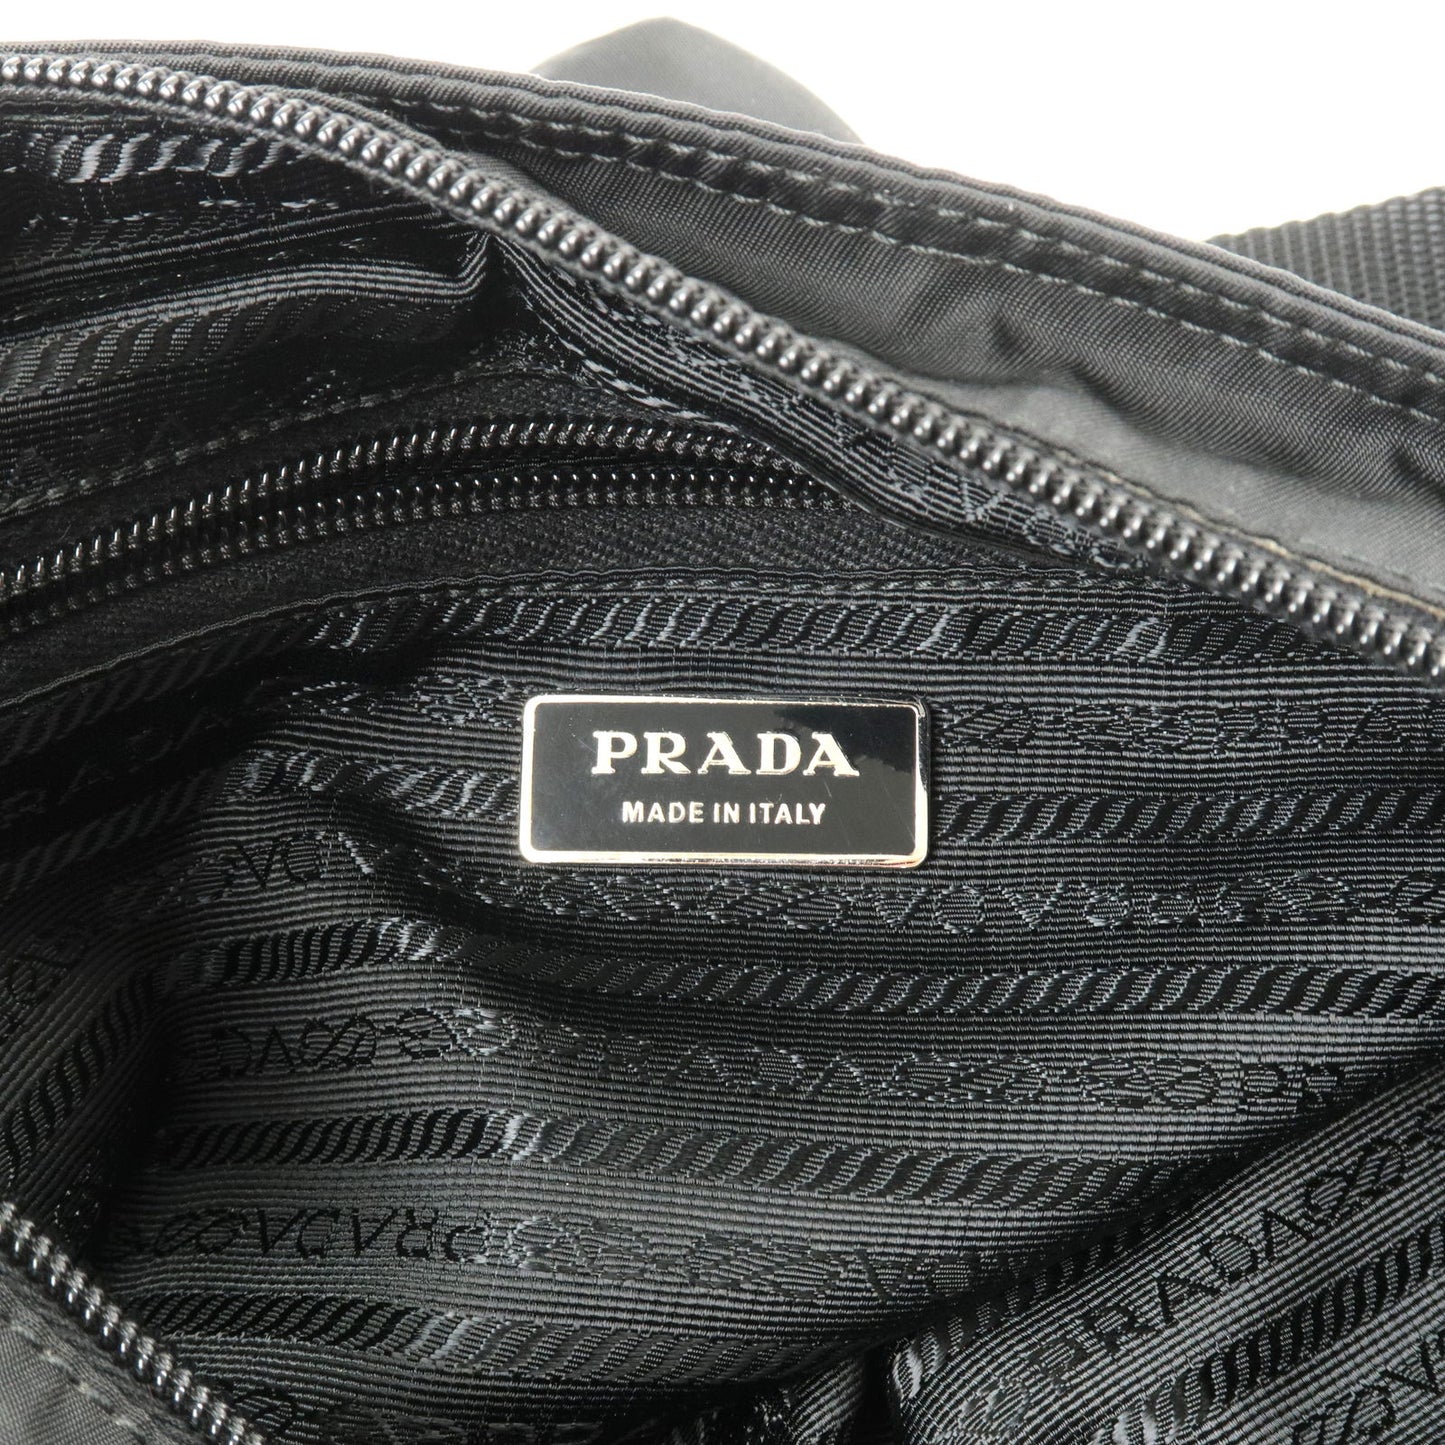 PRADA Logo Nylon Leather Shoulder Bag NERO Black VA0053